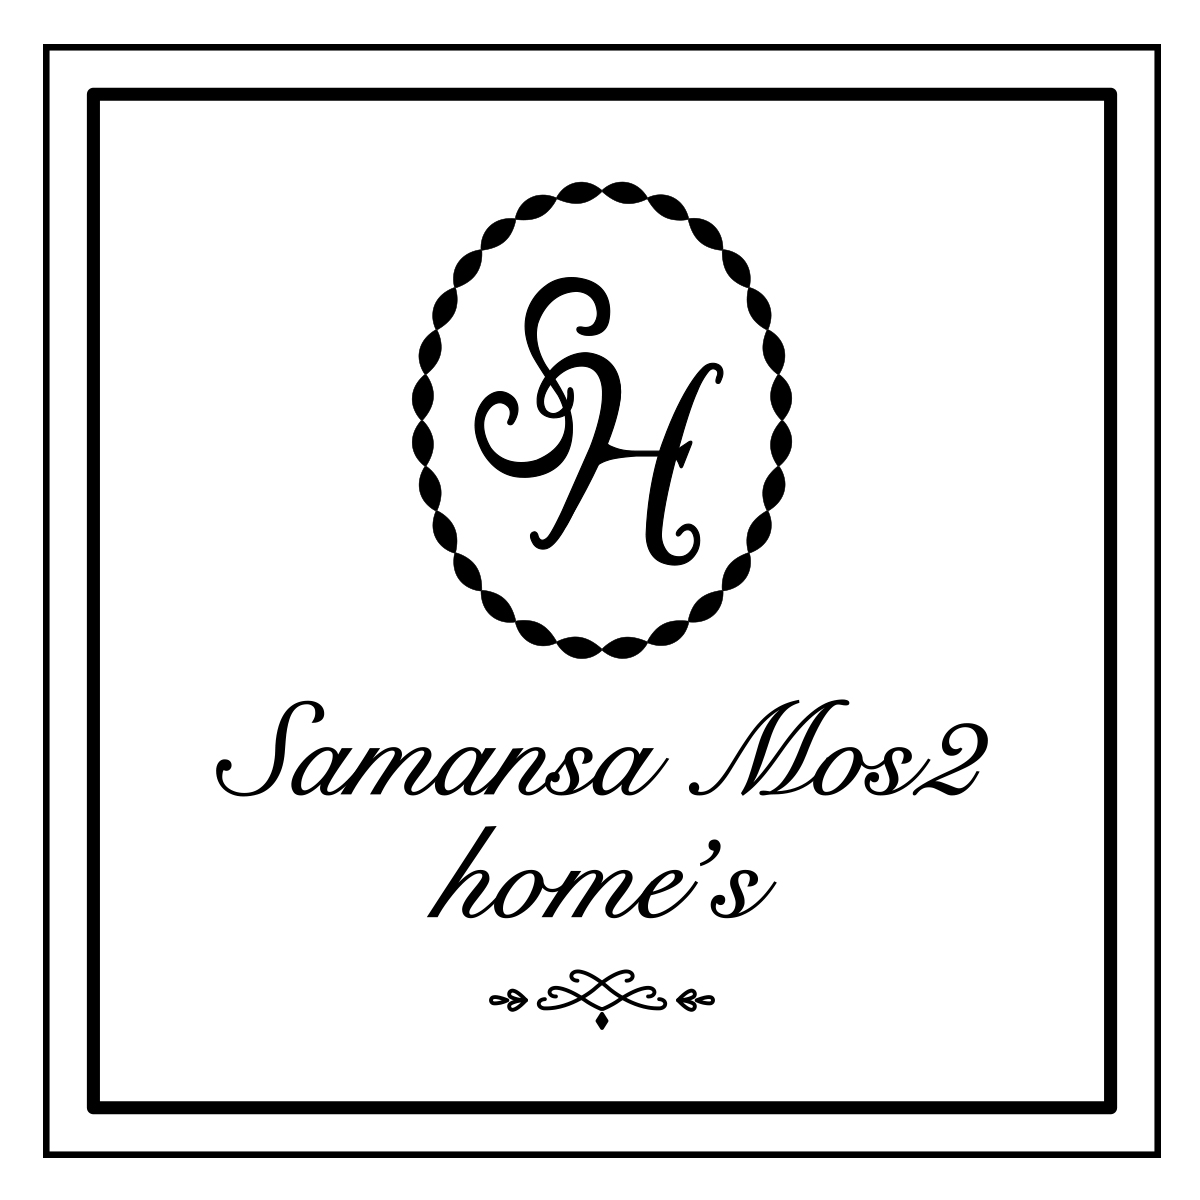 Samansa Mos2 home' s | LaLaport FUJIMI